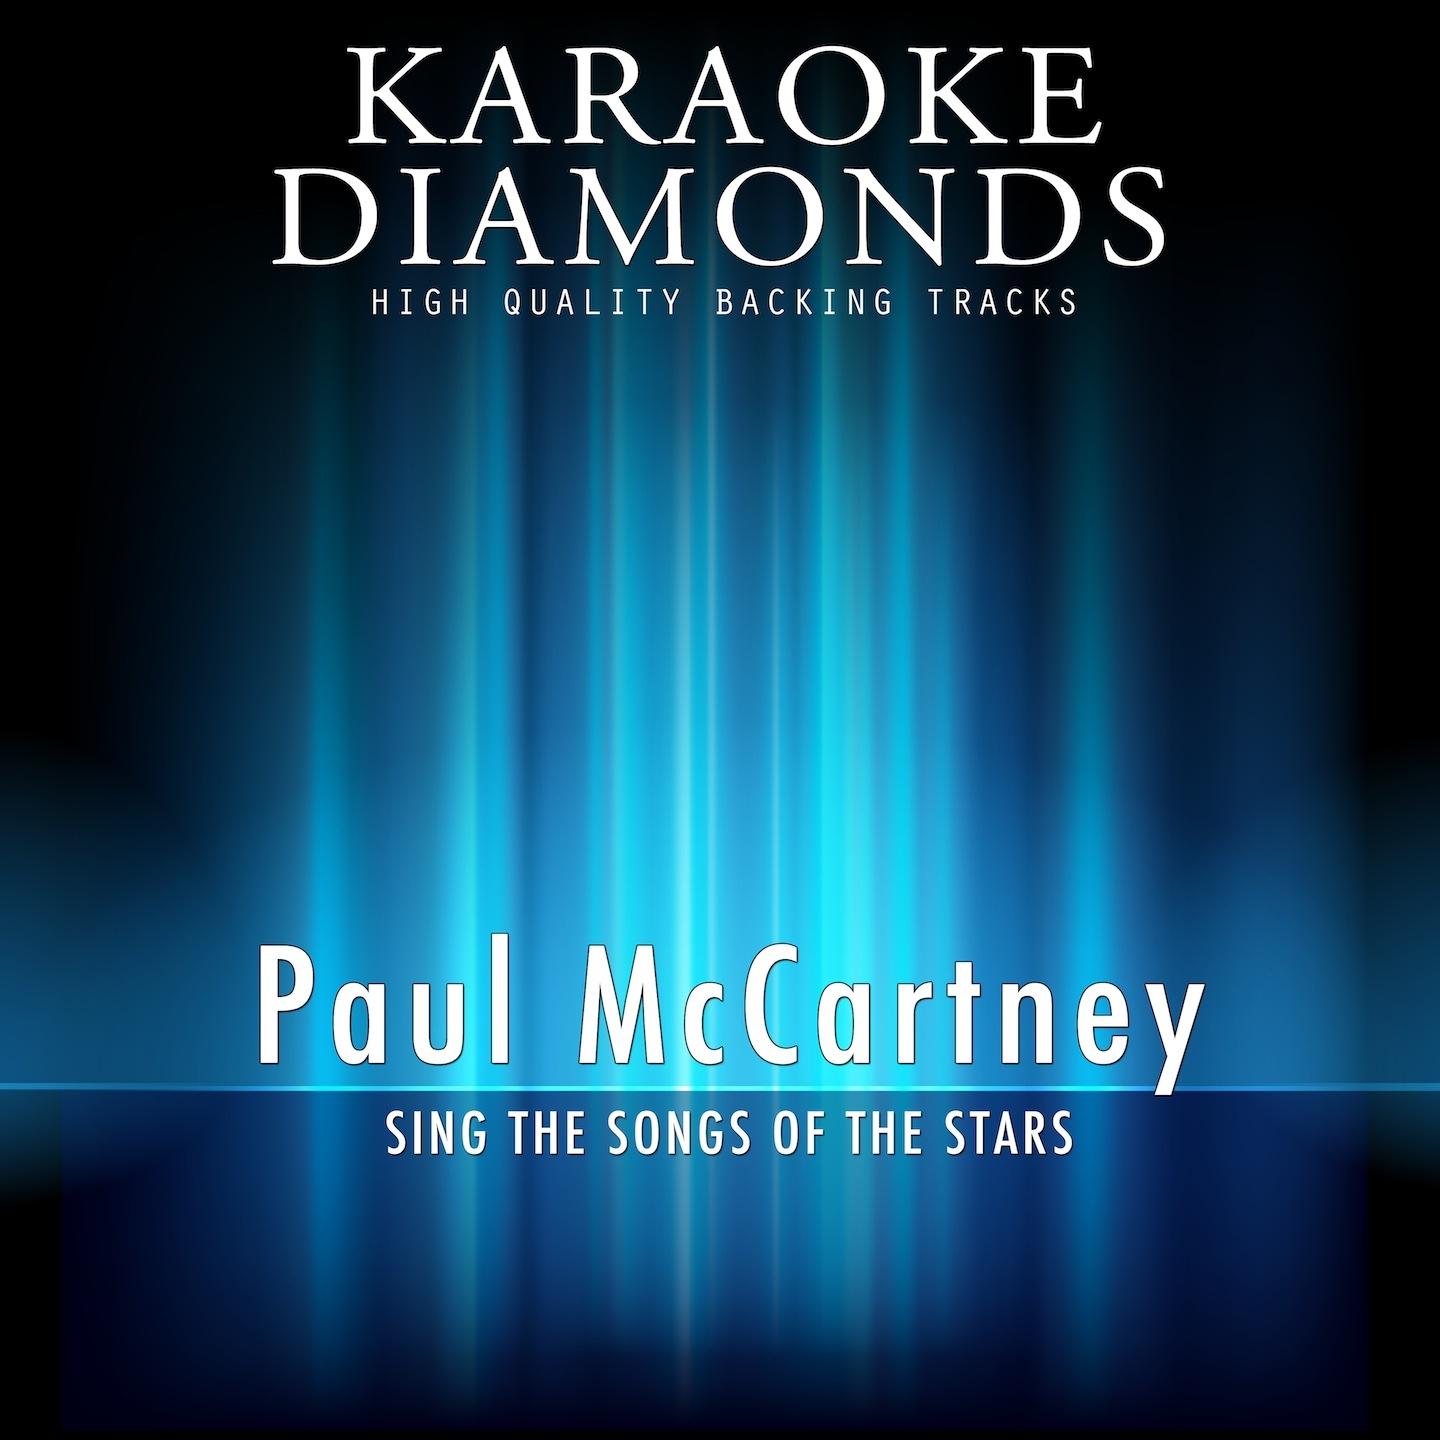 The Girl Is Mine (Karaoke Version In the Style of Paul McCartney)